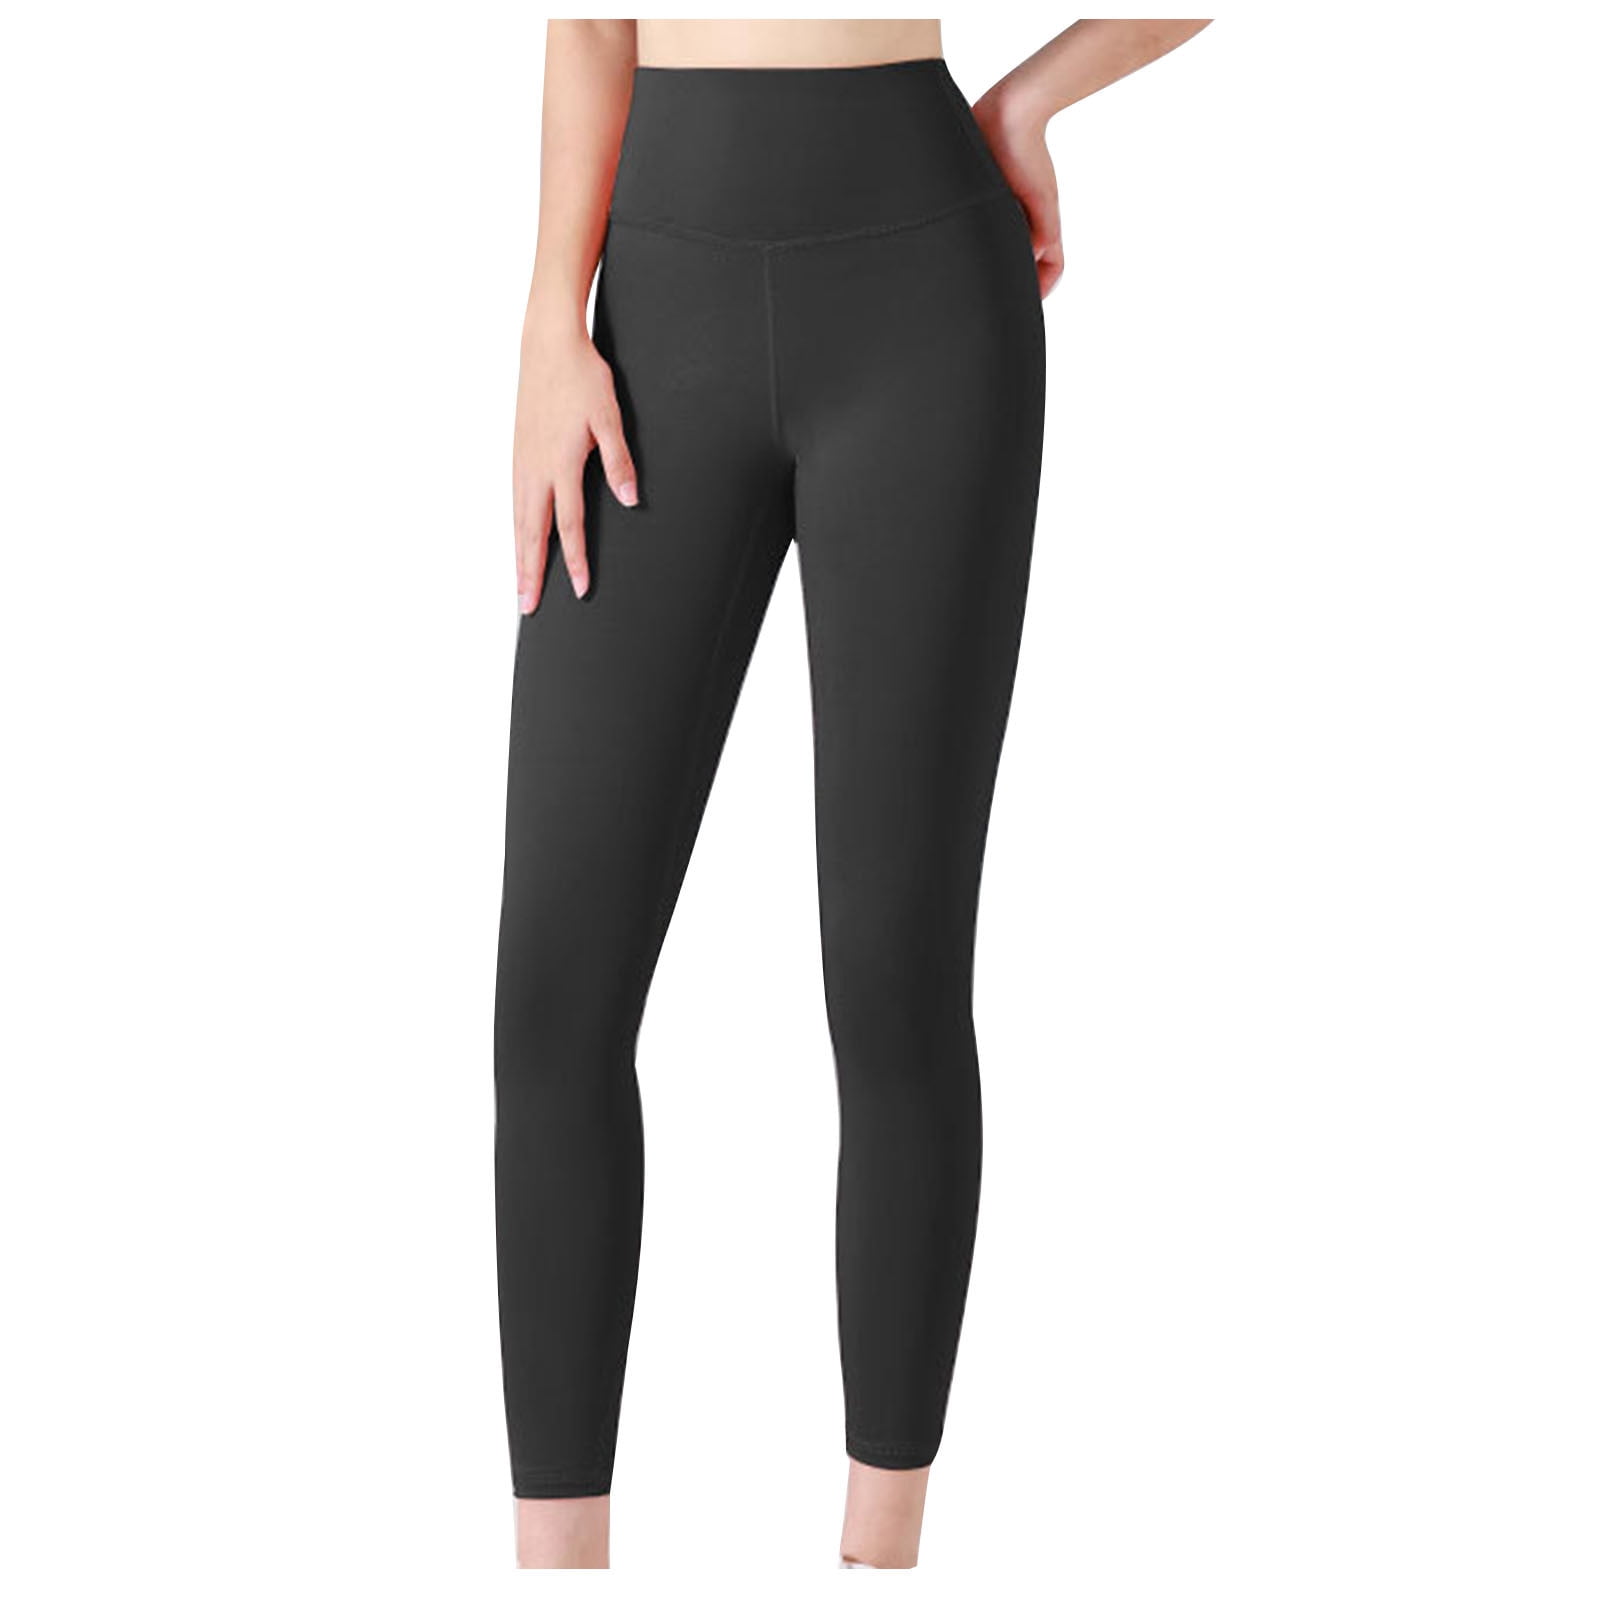 Augper Women's Super High Waist Yoga Pants Slant Pockets Fitness Running  Training Stretch Quick Dry Tight Sports Pants